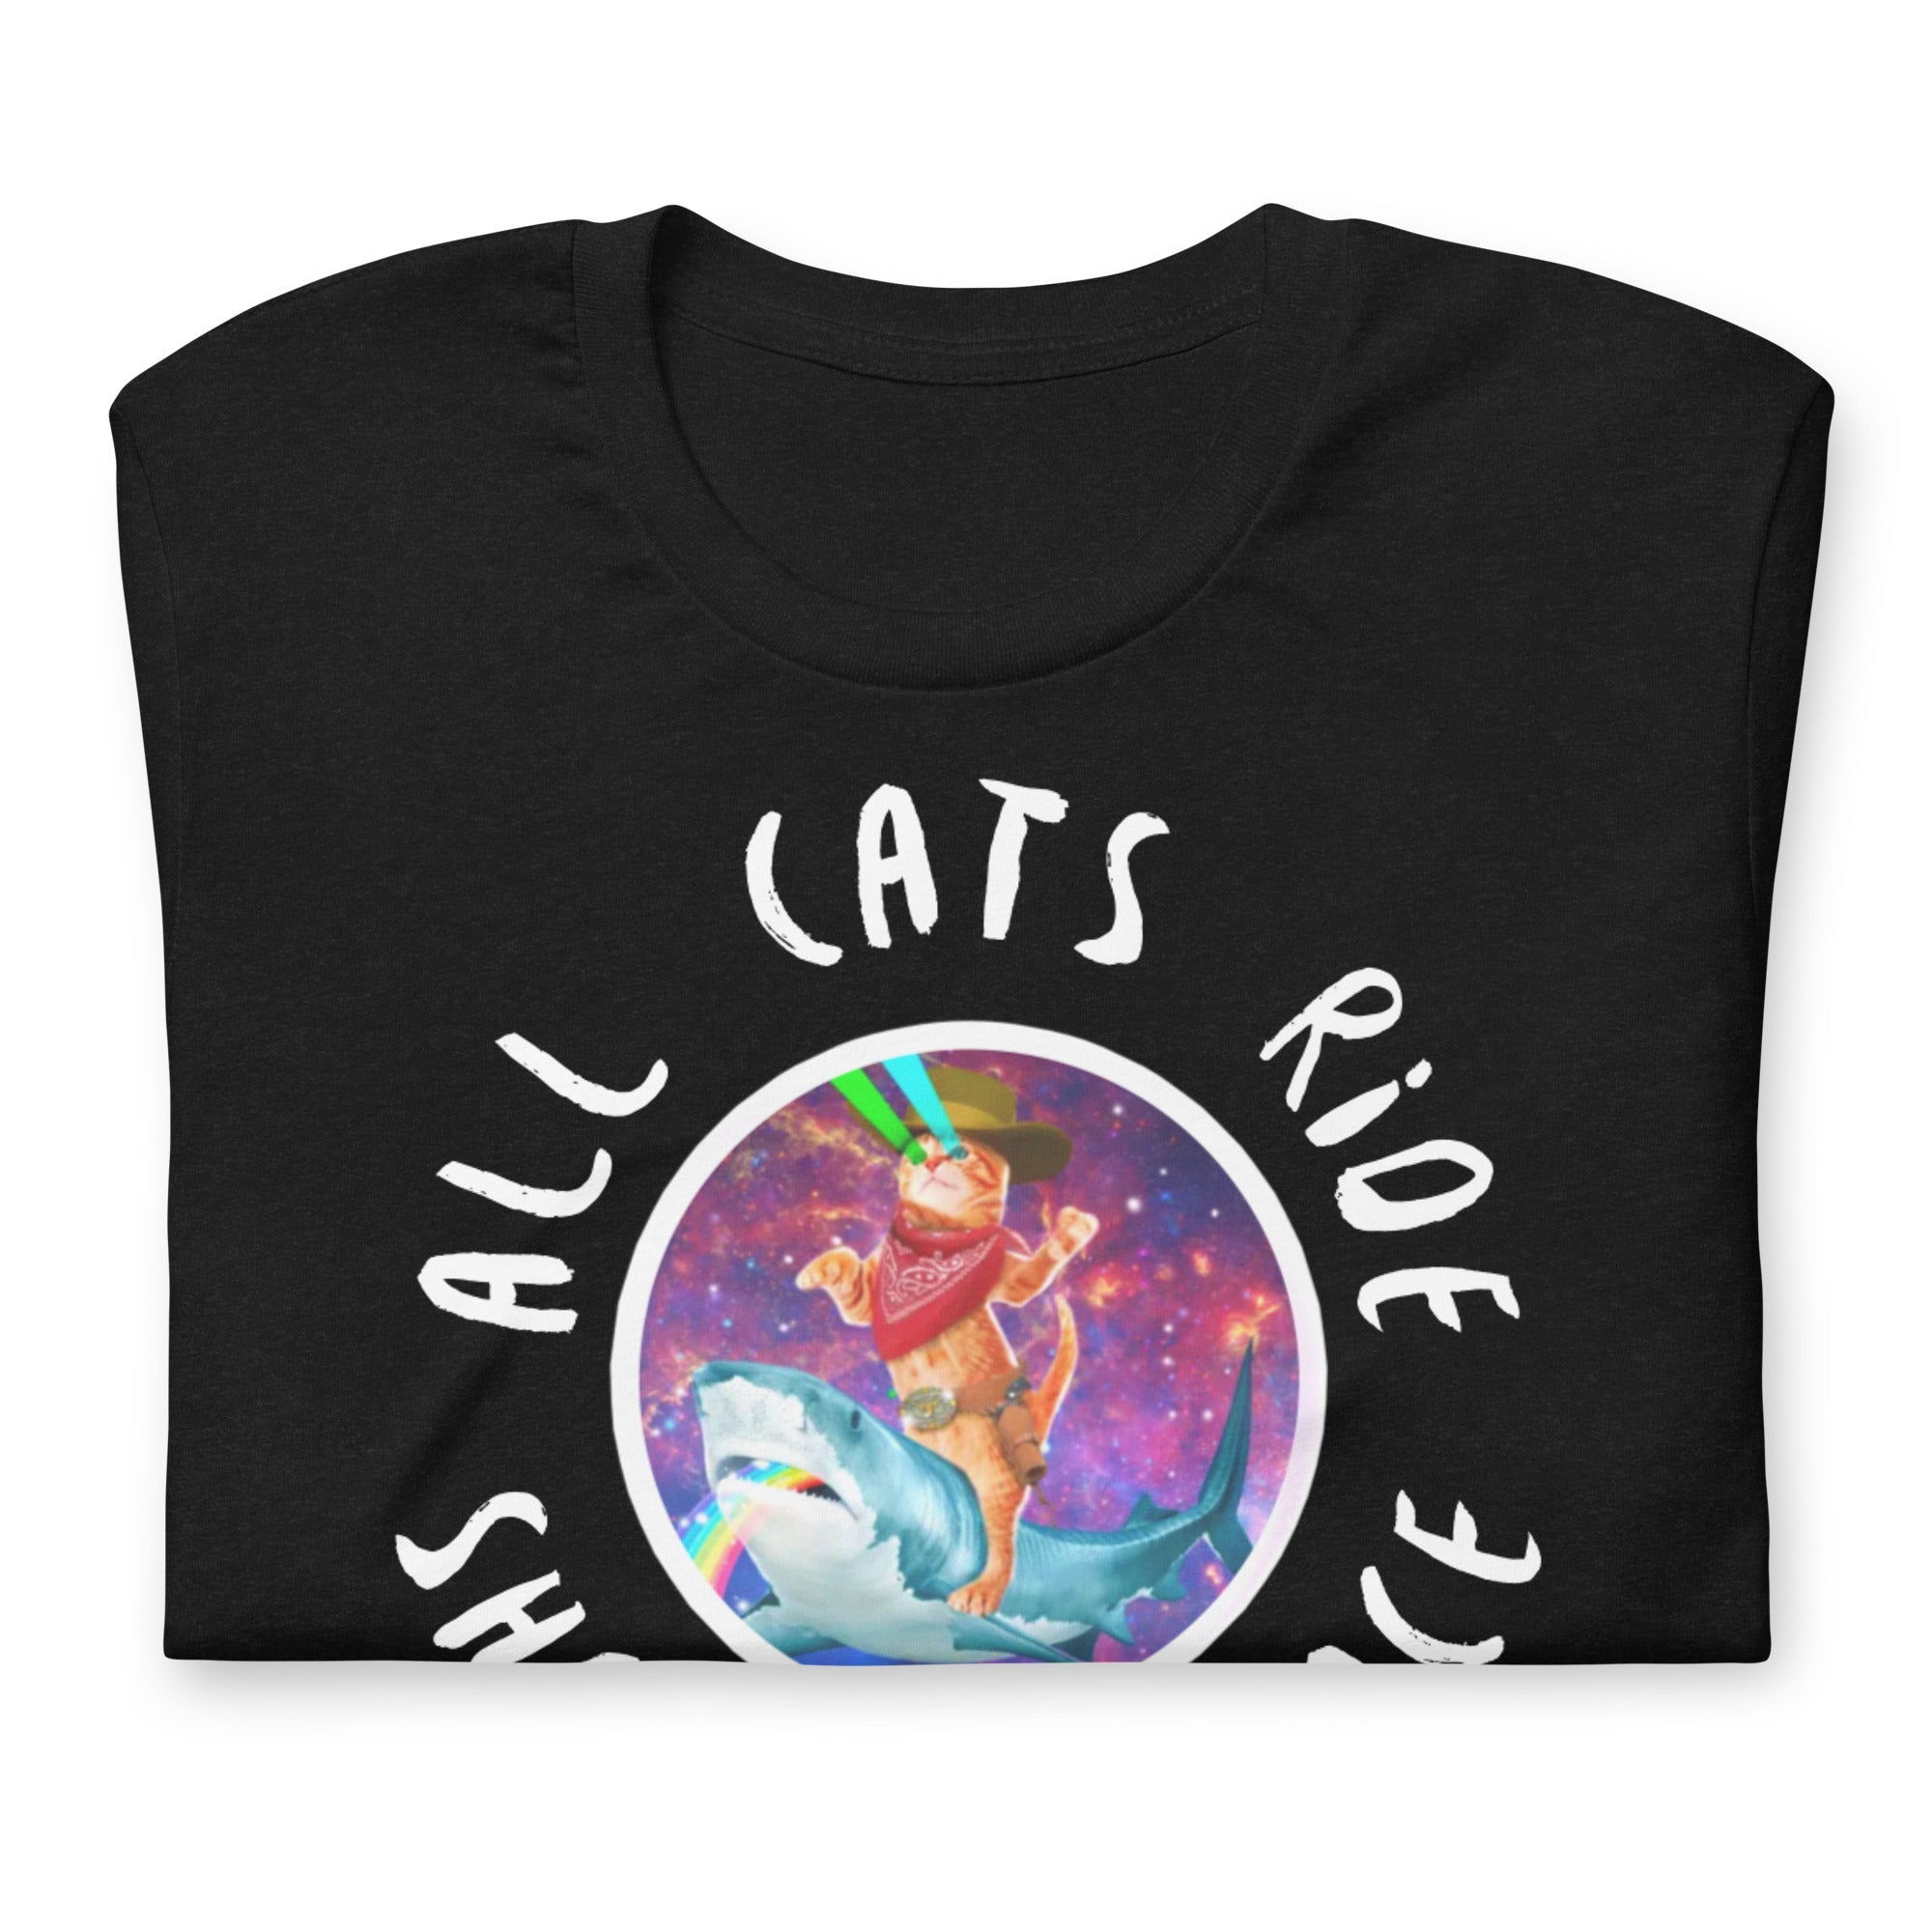 Cat Riding Shark shirt